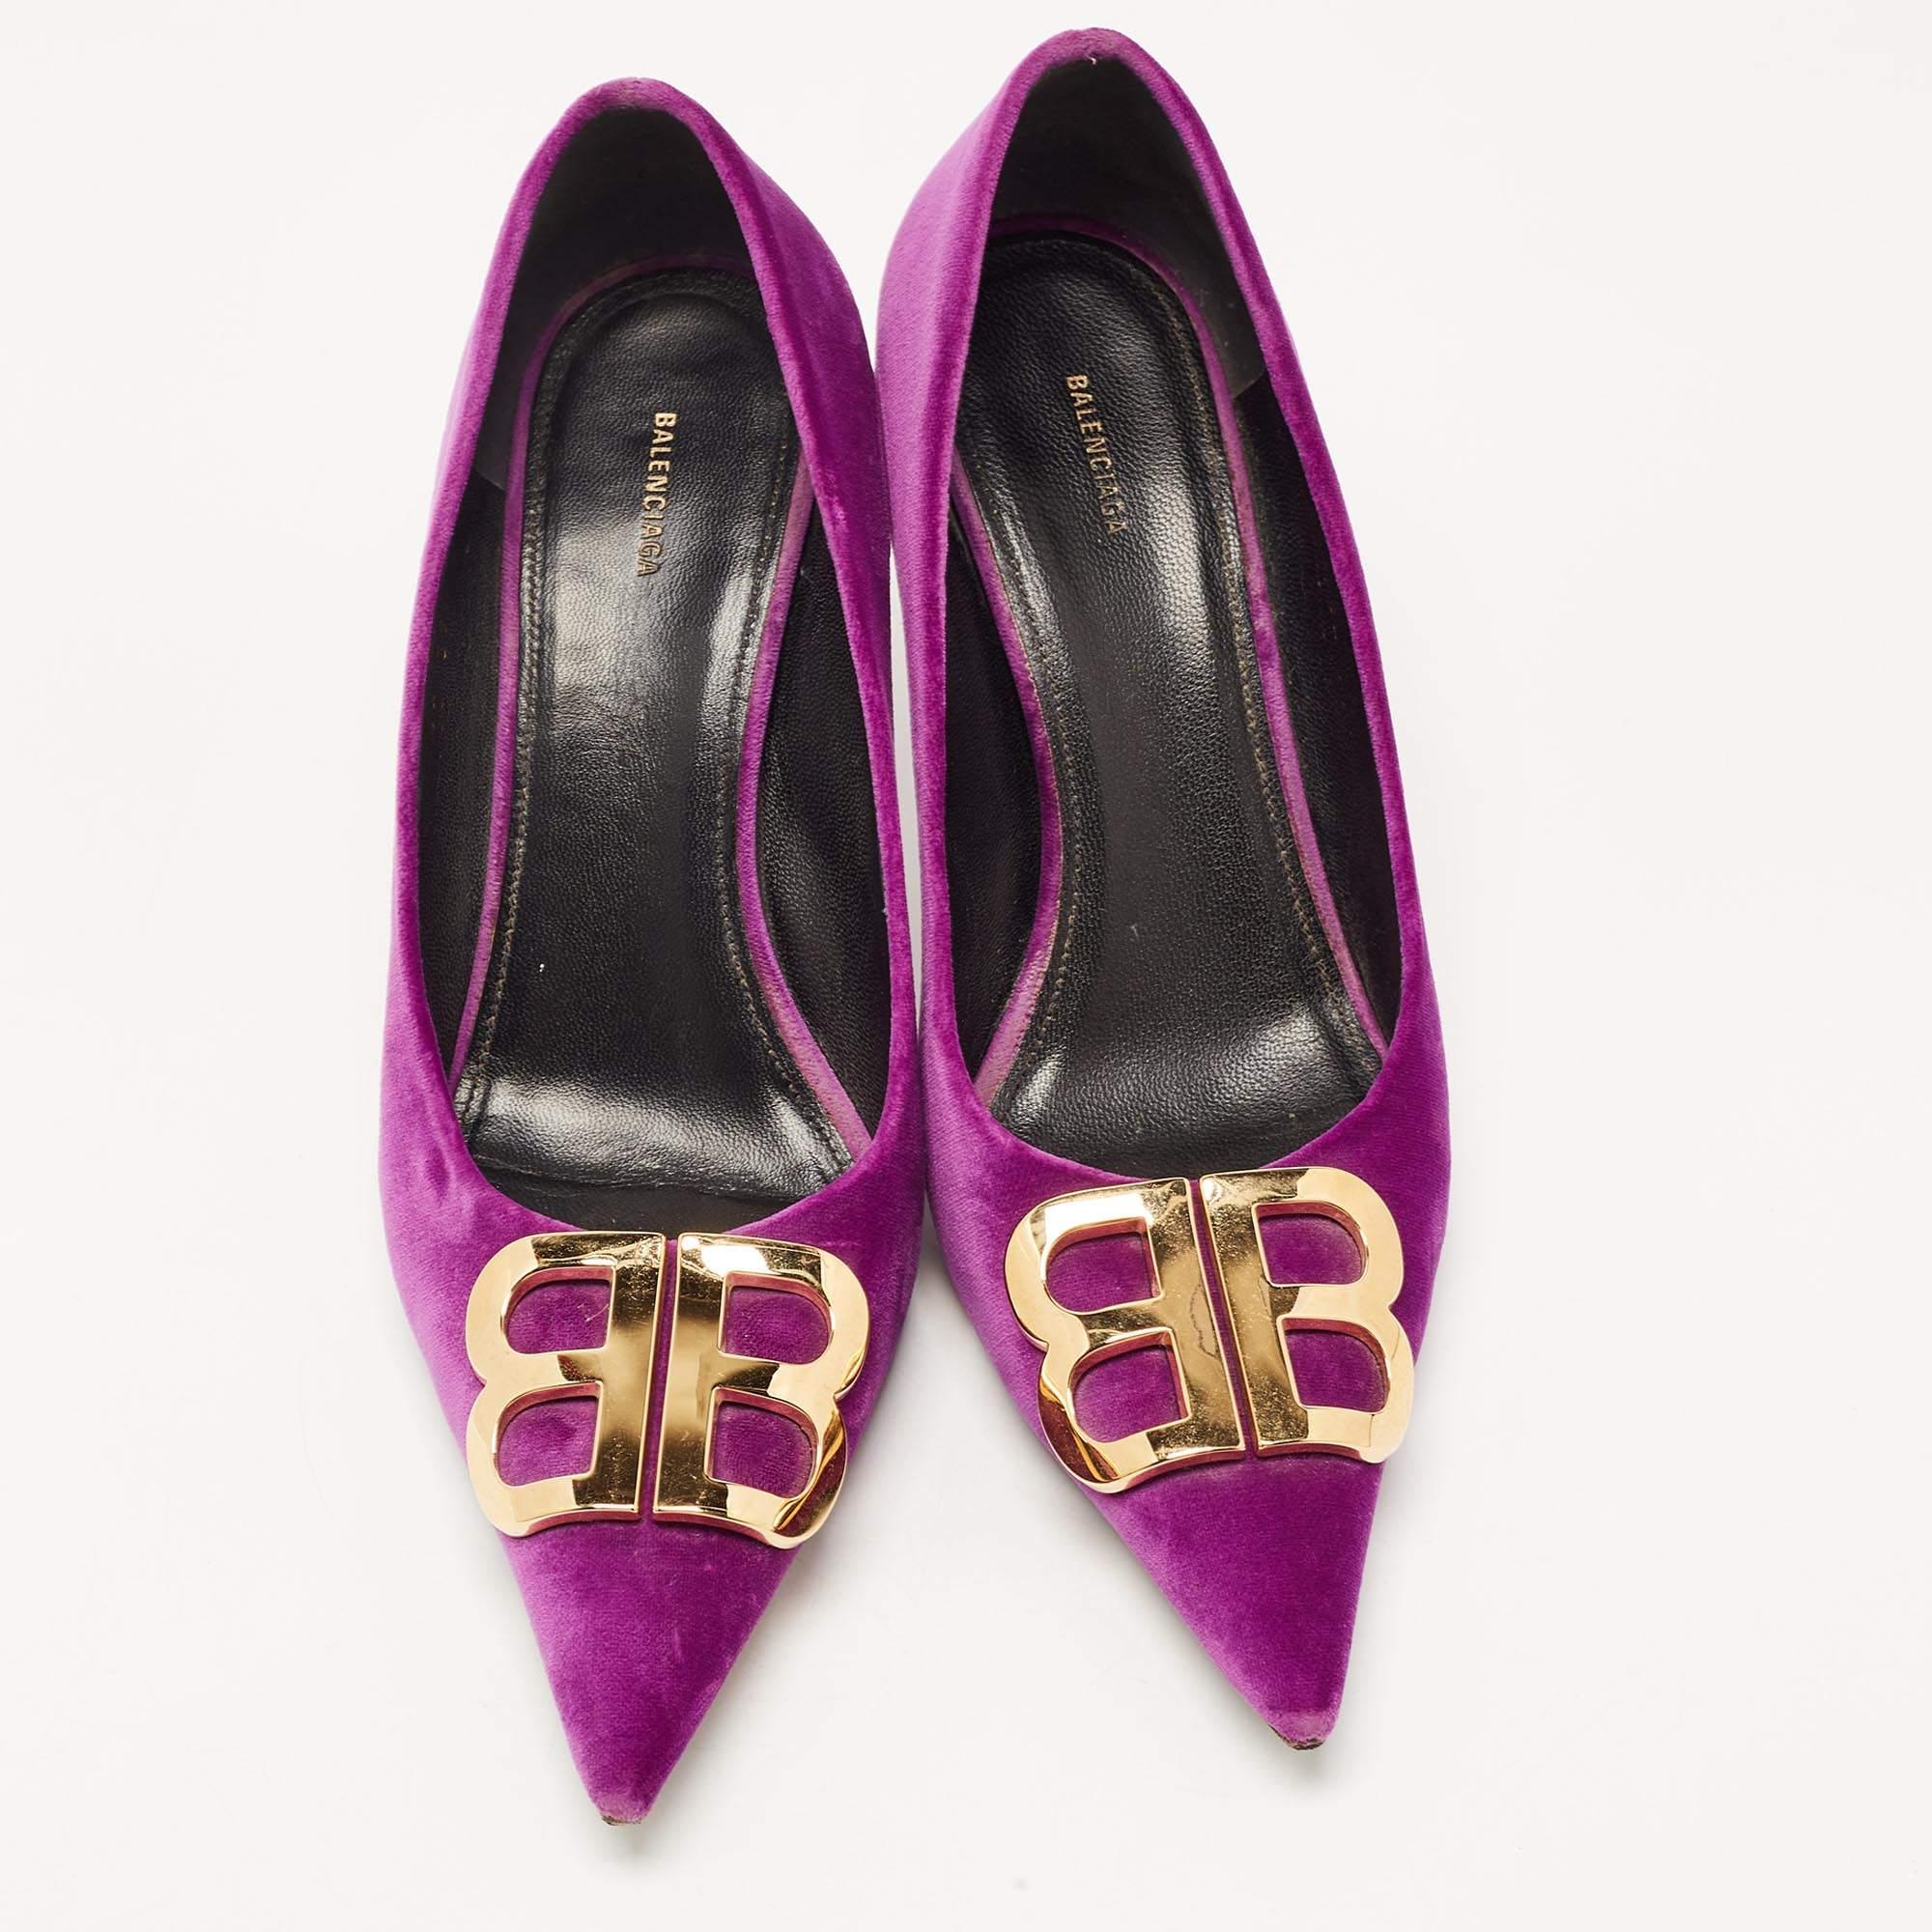 Balenciaga Purple Velvet Pointed Toe BB Pumps Size 39 2